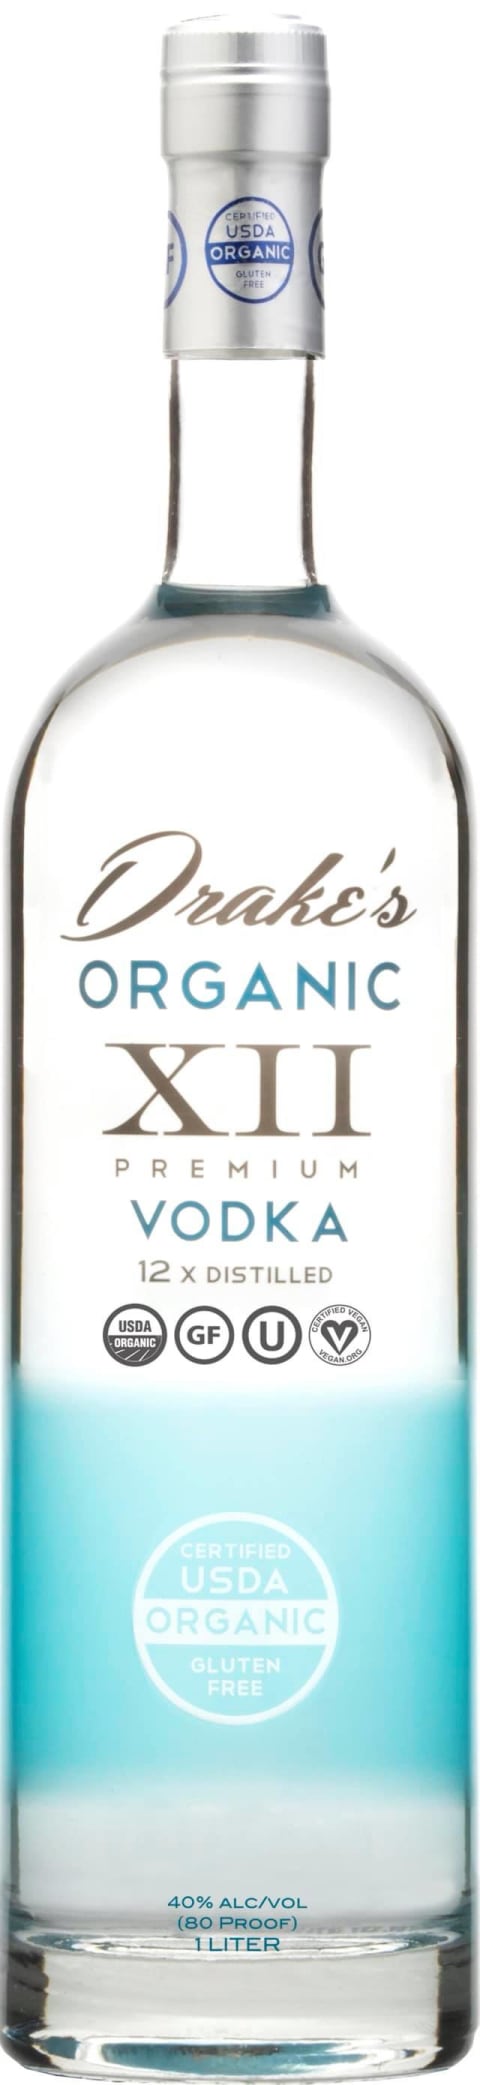 Drake's Organic XII Premium Vodka